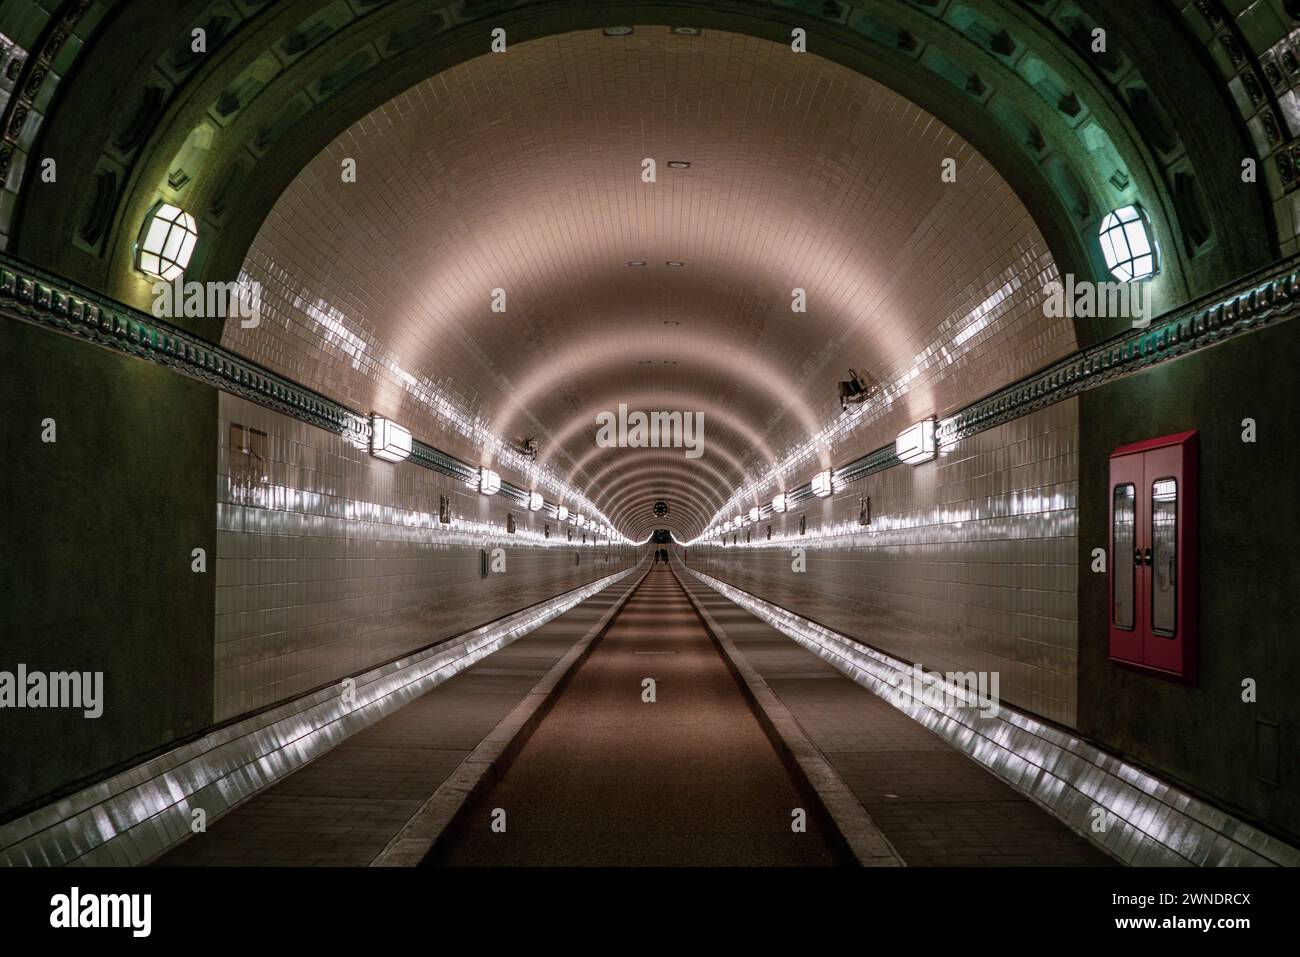 The old St. Pauli Elbe Tunnel in Hamburg, Germany. Stock Photo